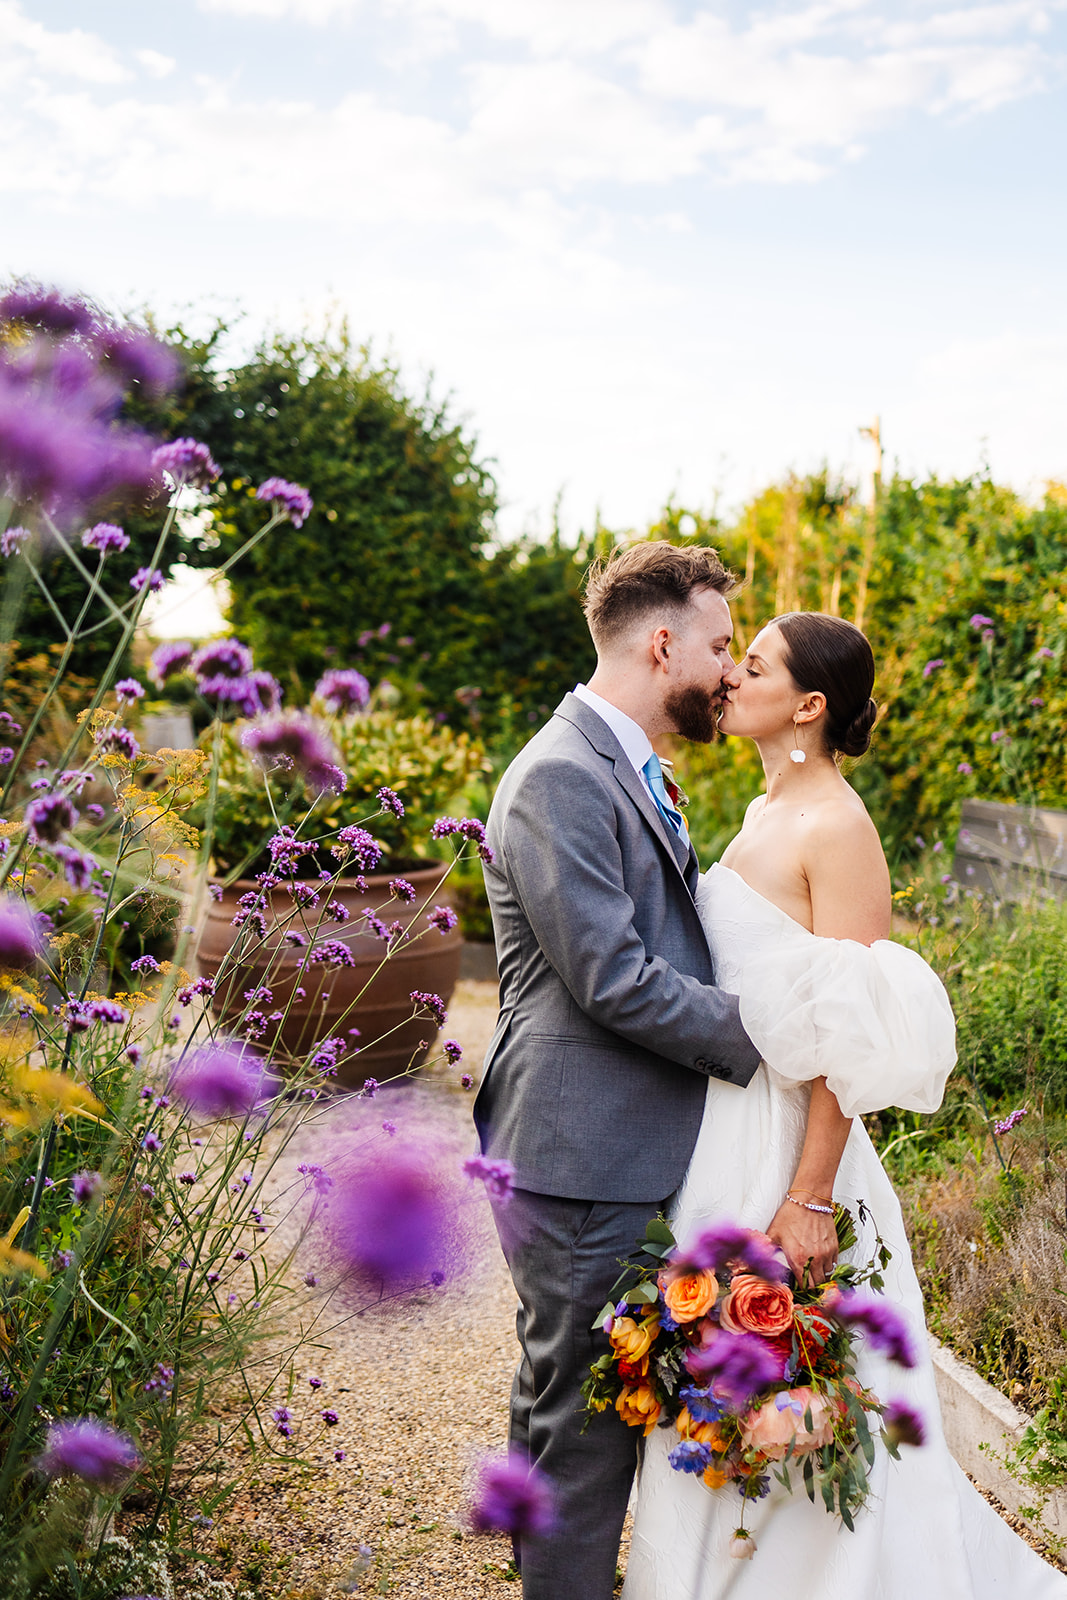 Couple in wildflower garden kiss 